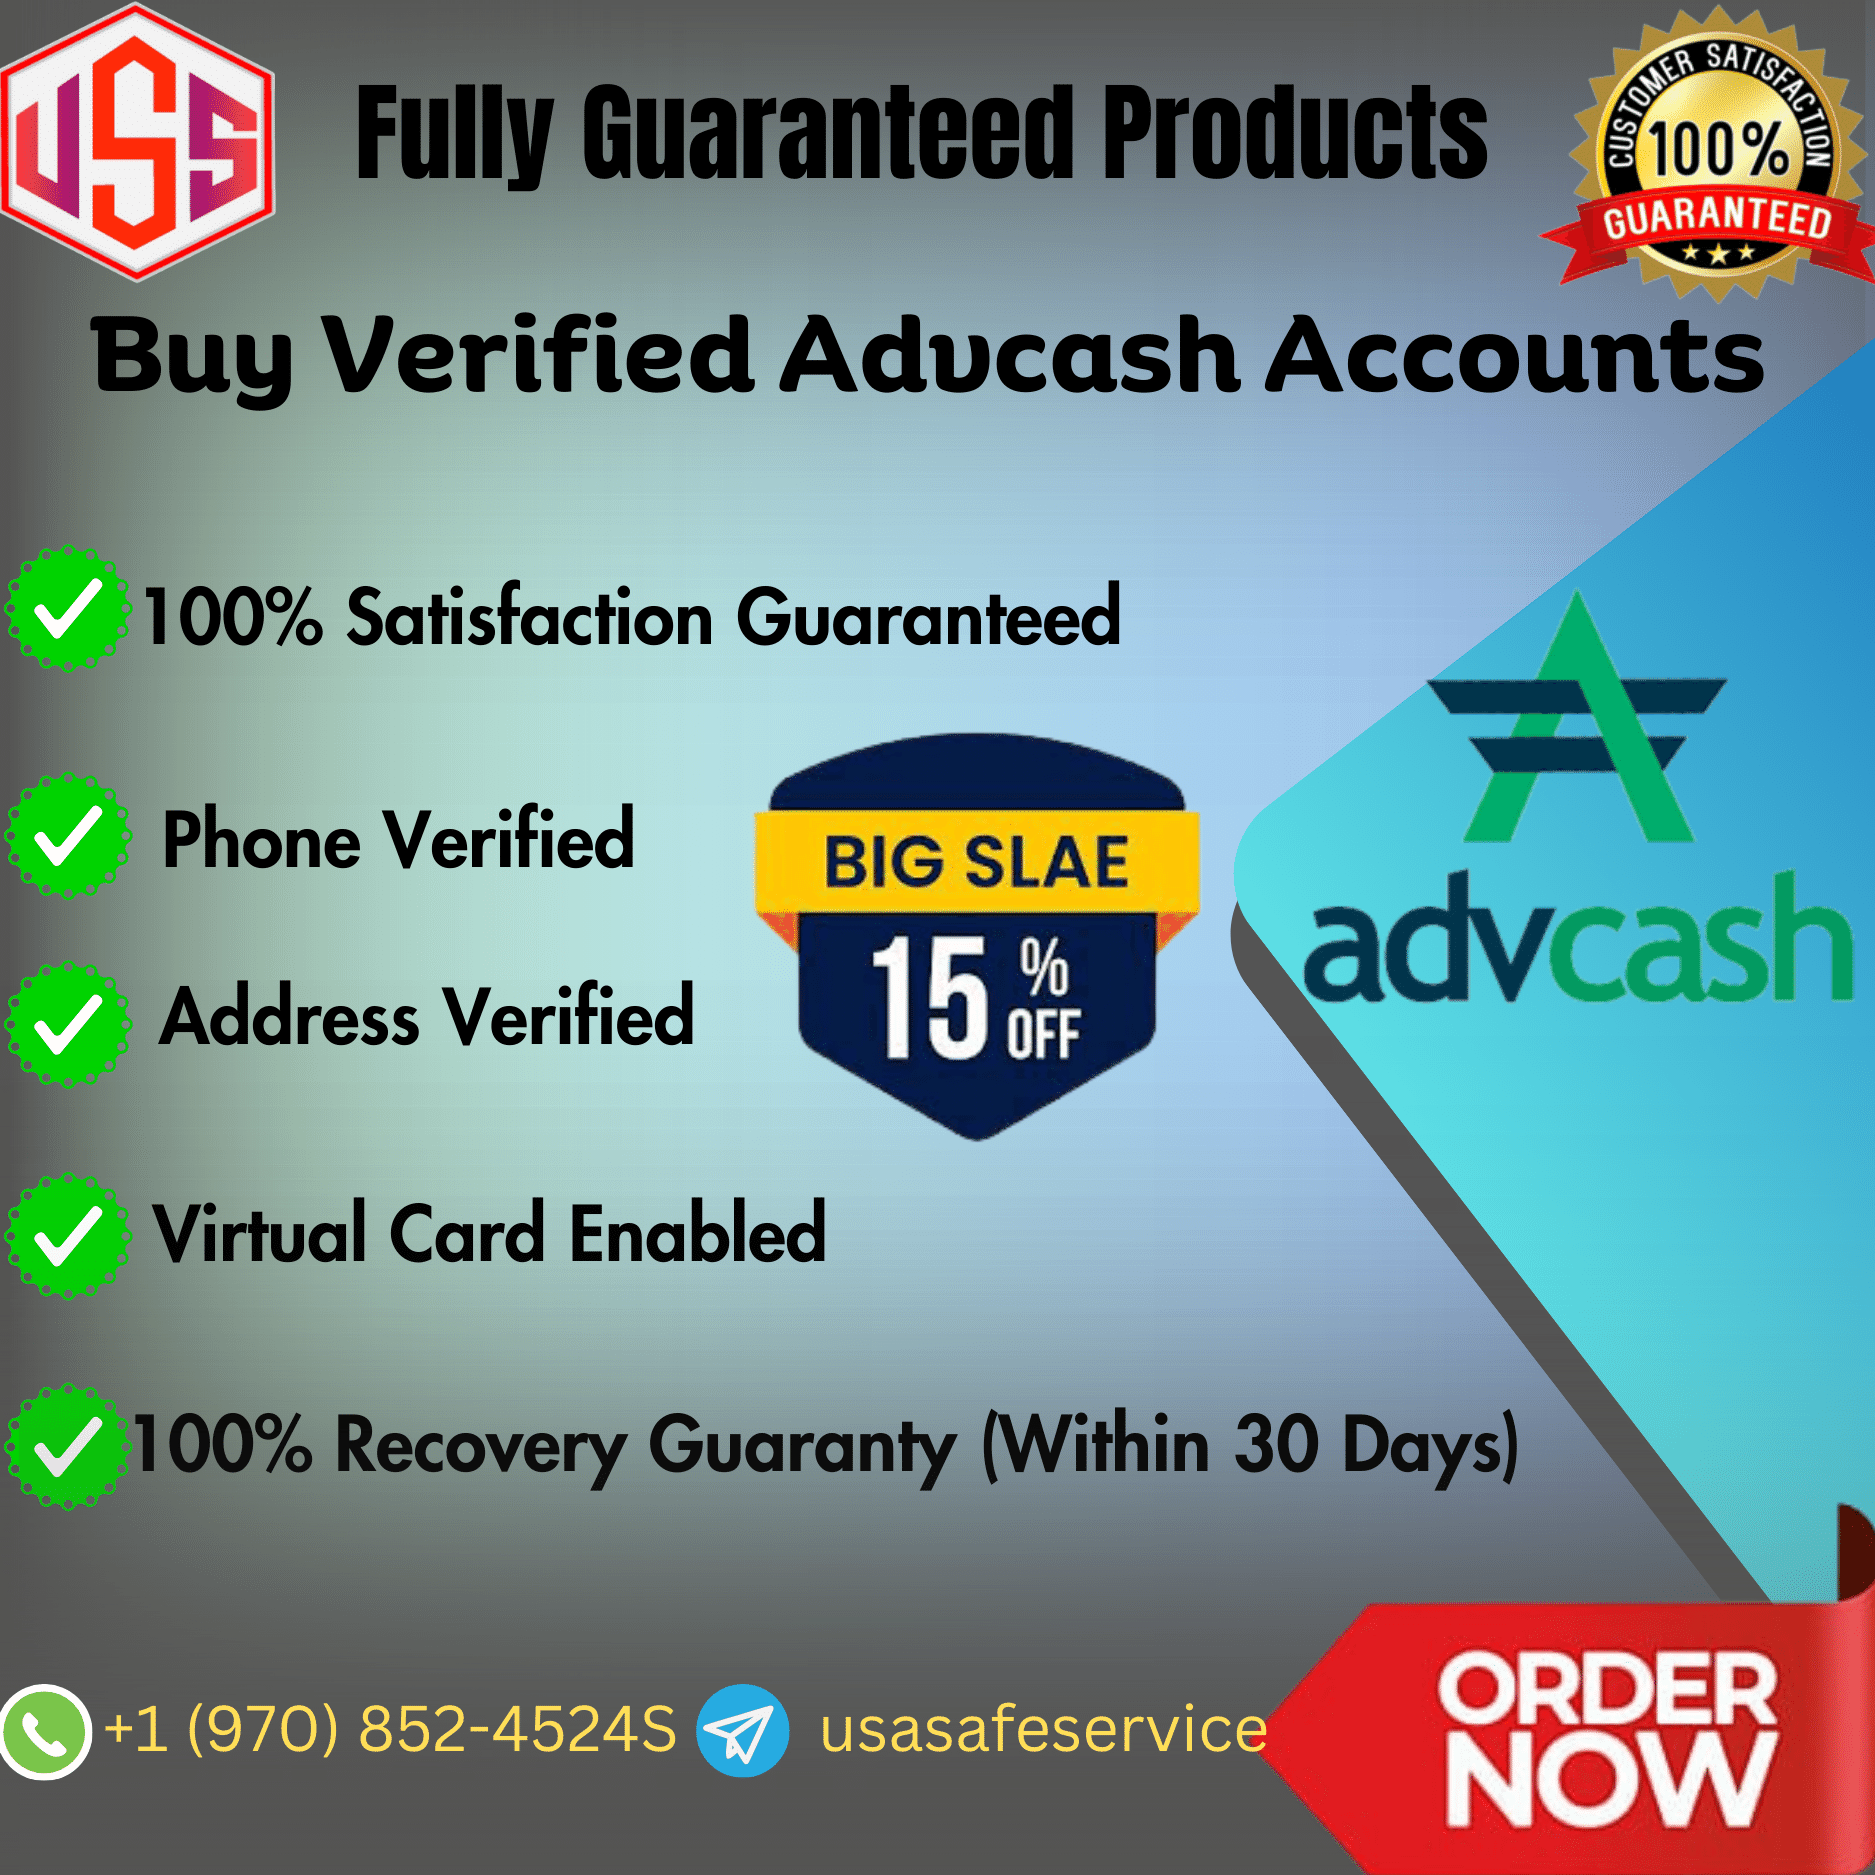 Buy Verified Advcash Accounts - 100% secure & verified.